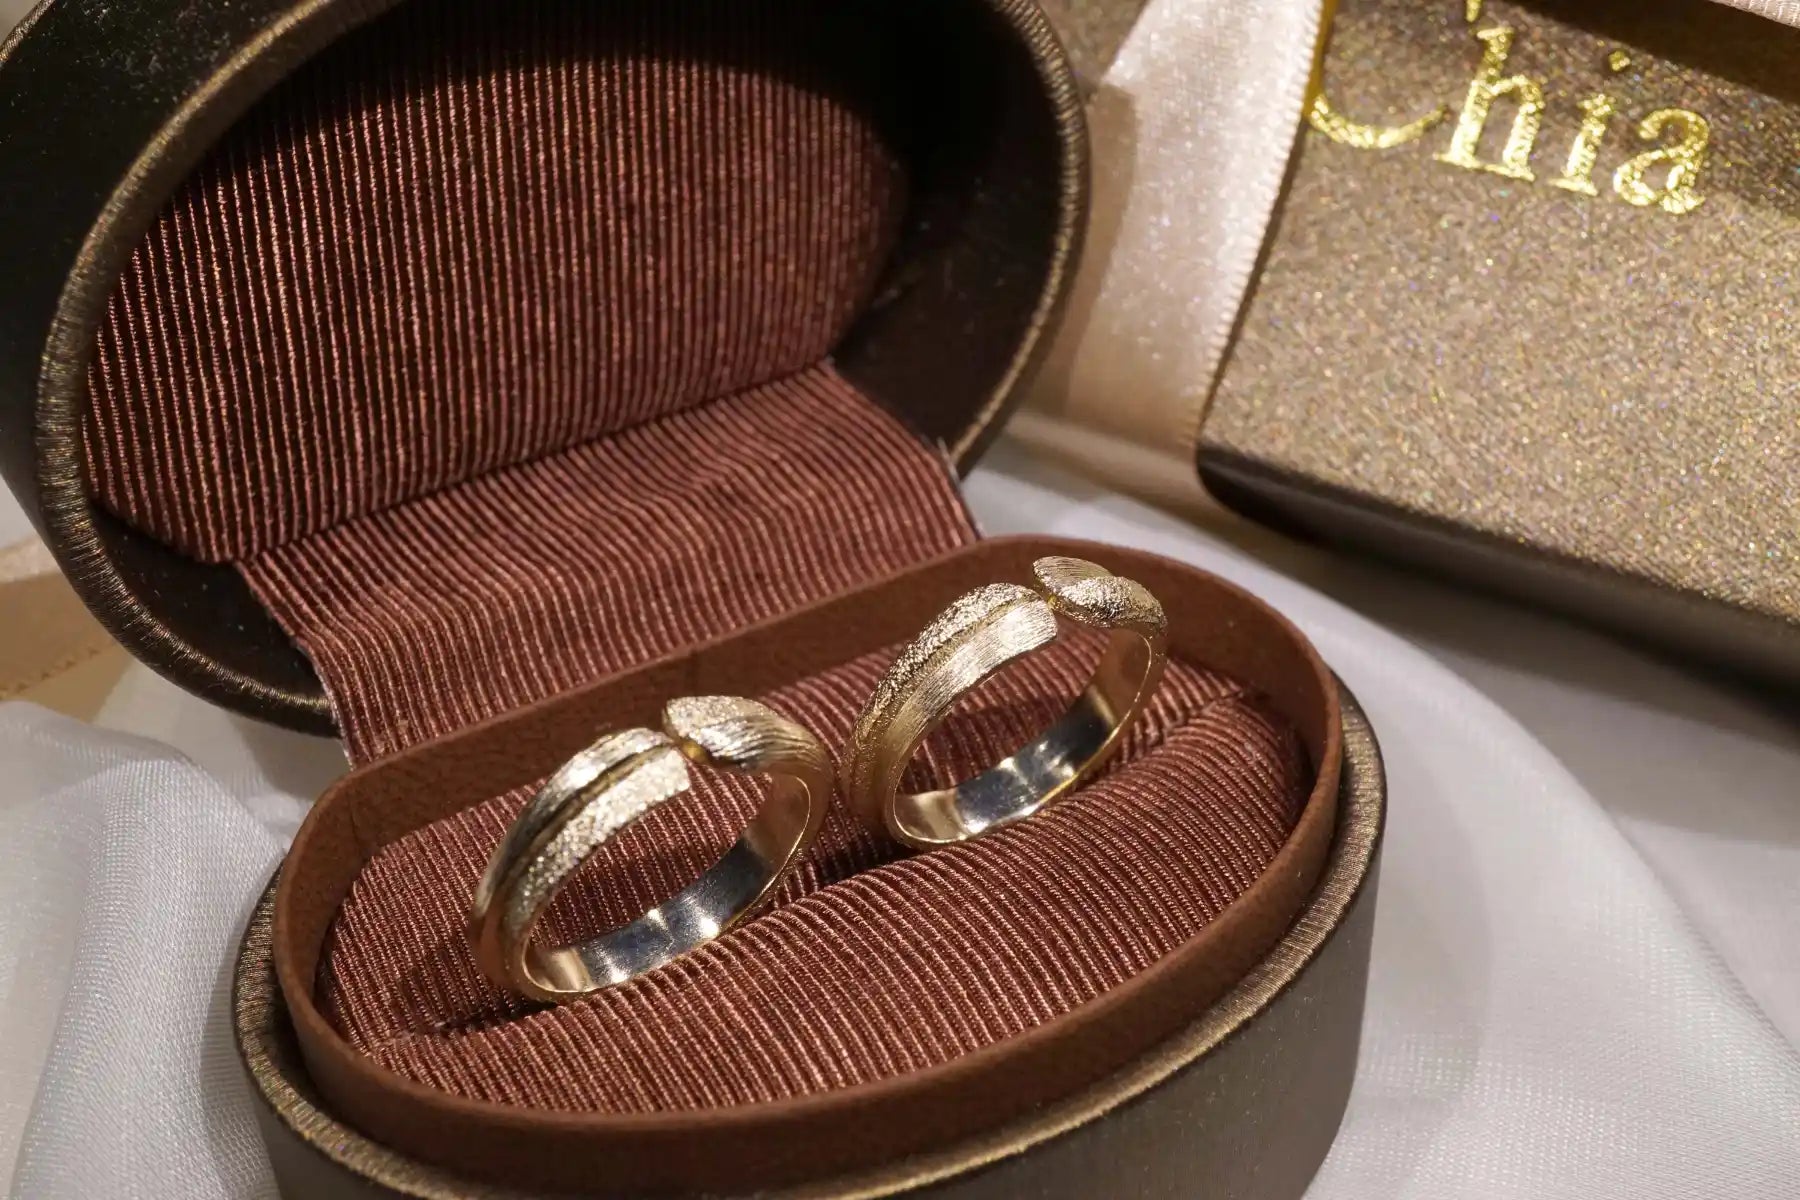 Chia Jewelry客製化k金婚戒對戒品牌推薦分享，以擁抱為主題的獨特簡約婚戒設計，可調式婚戒採用14k金製作